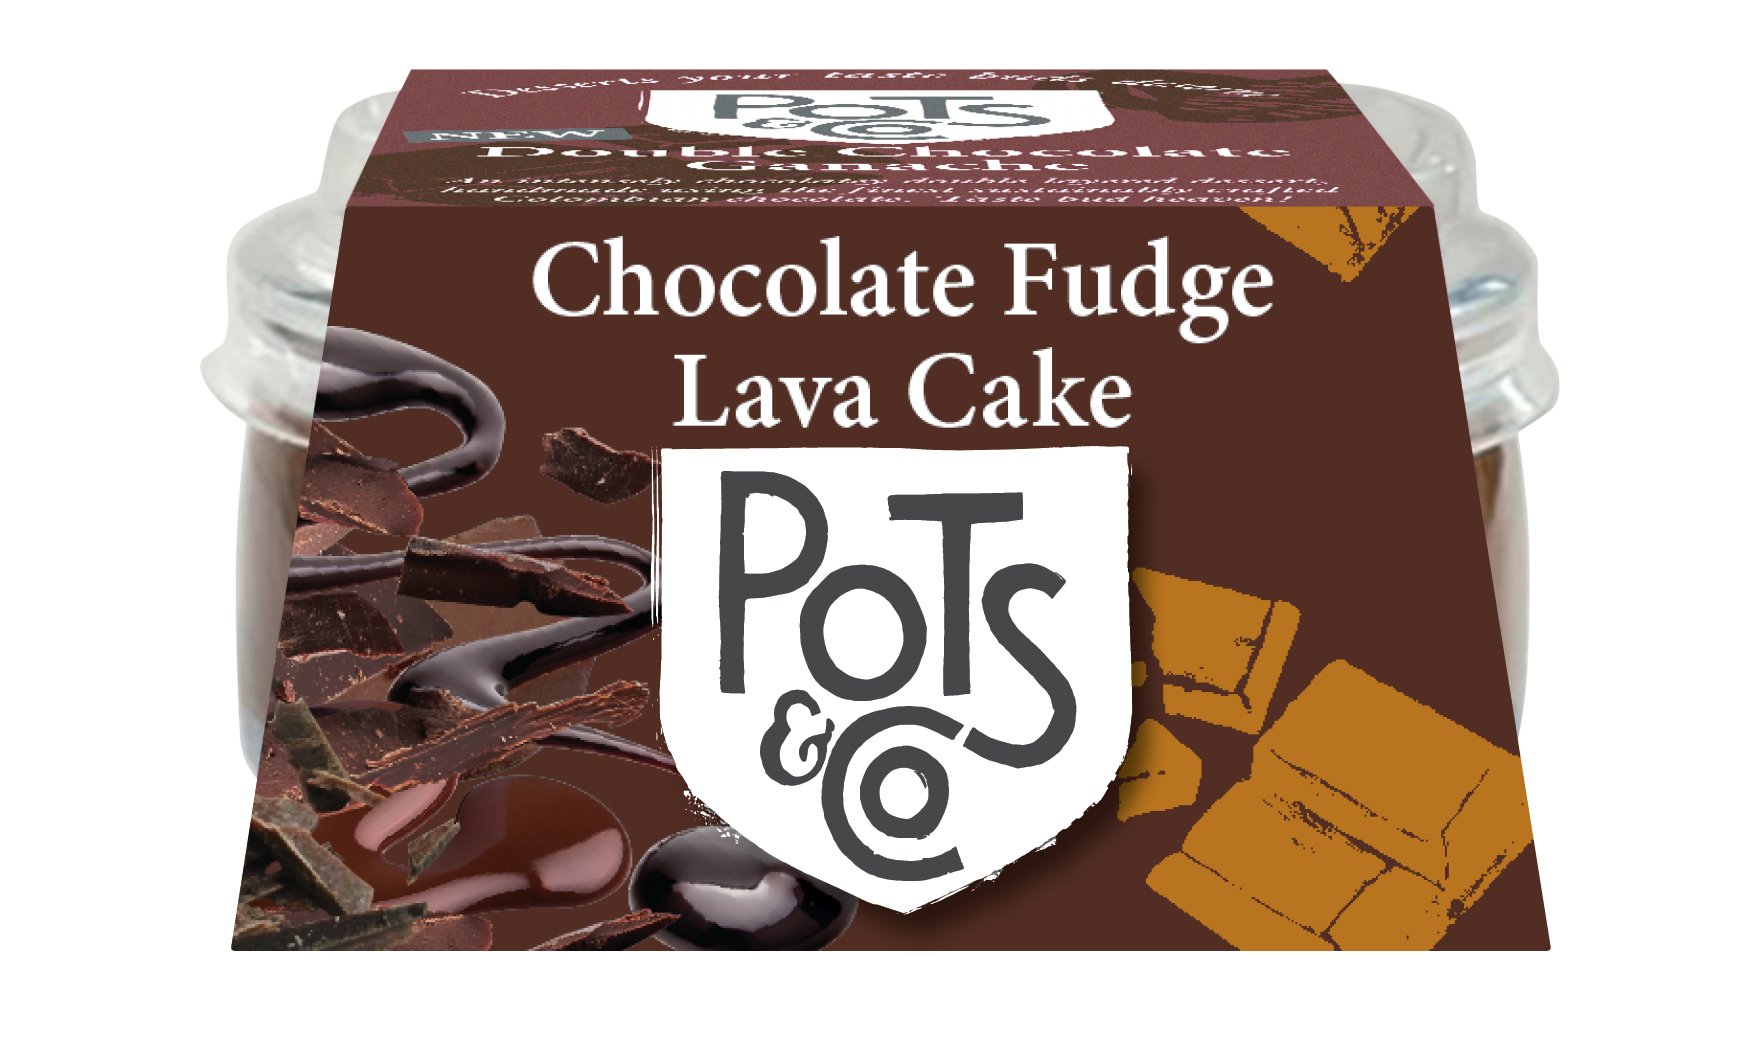 Chocolate Fudge Cake, Pots & Co (4x90g)